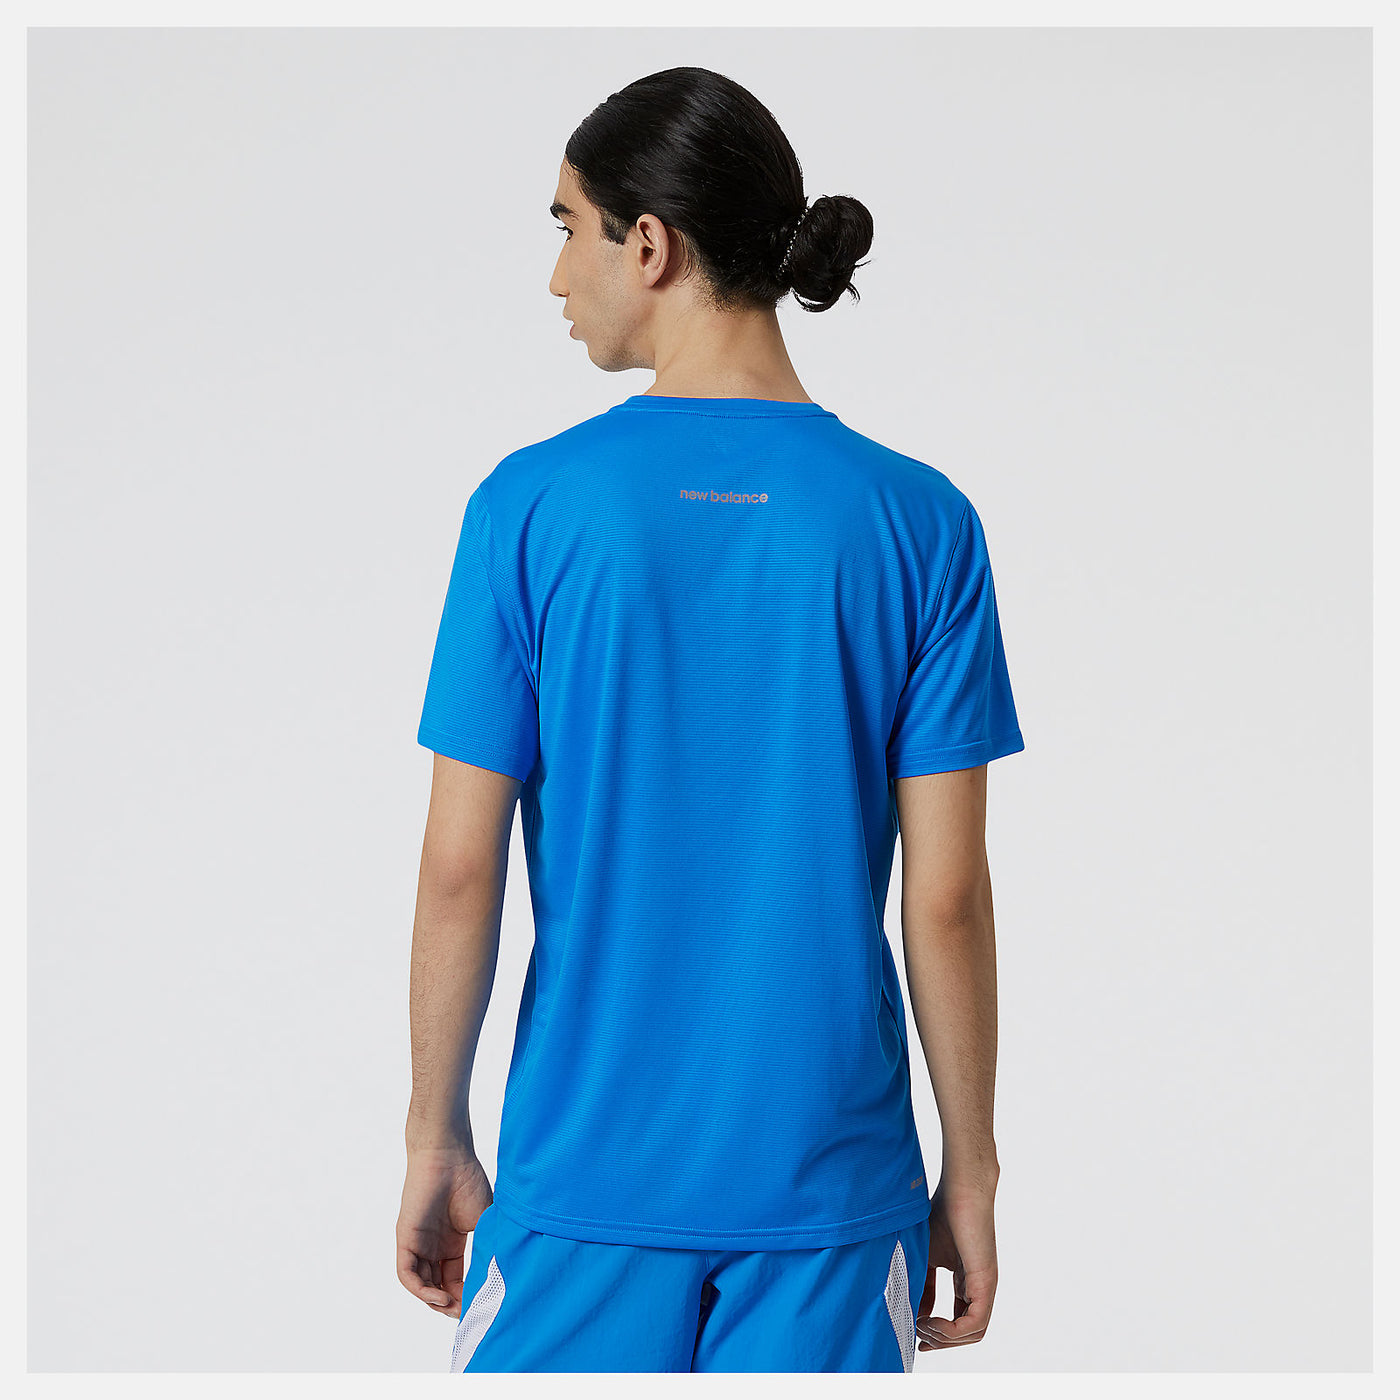 New Balance Accelerate Women's Running T-Shirt - Thirty Watt